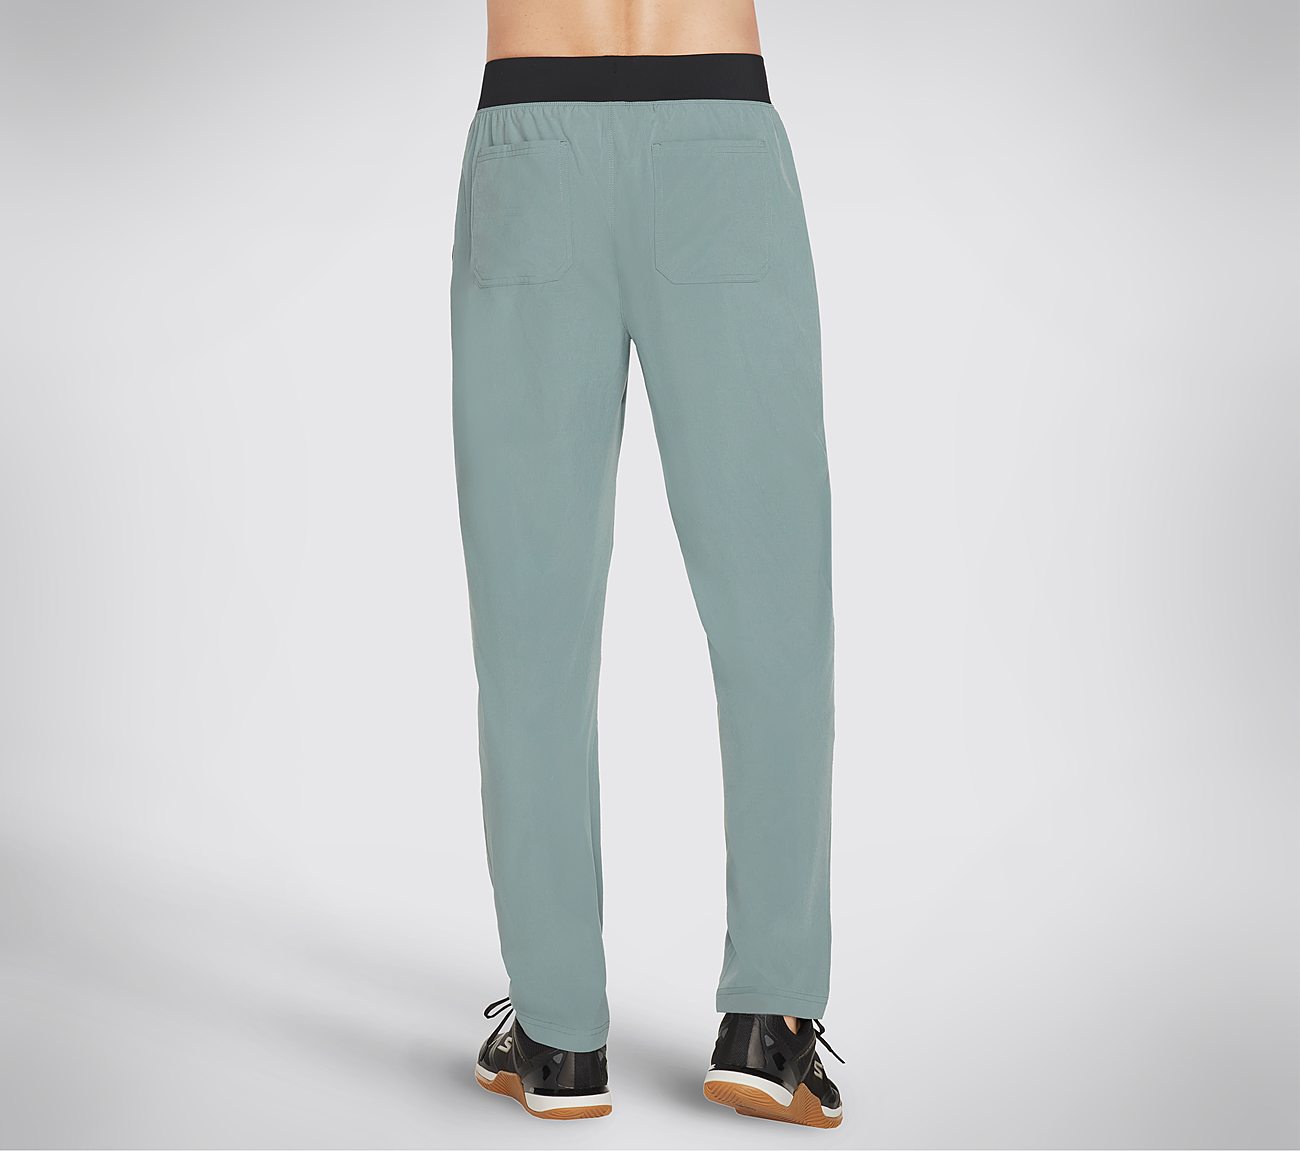 Skechers Go Walk Action Pant - Teal/Blue Workout Pants For Men